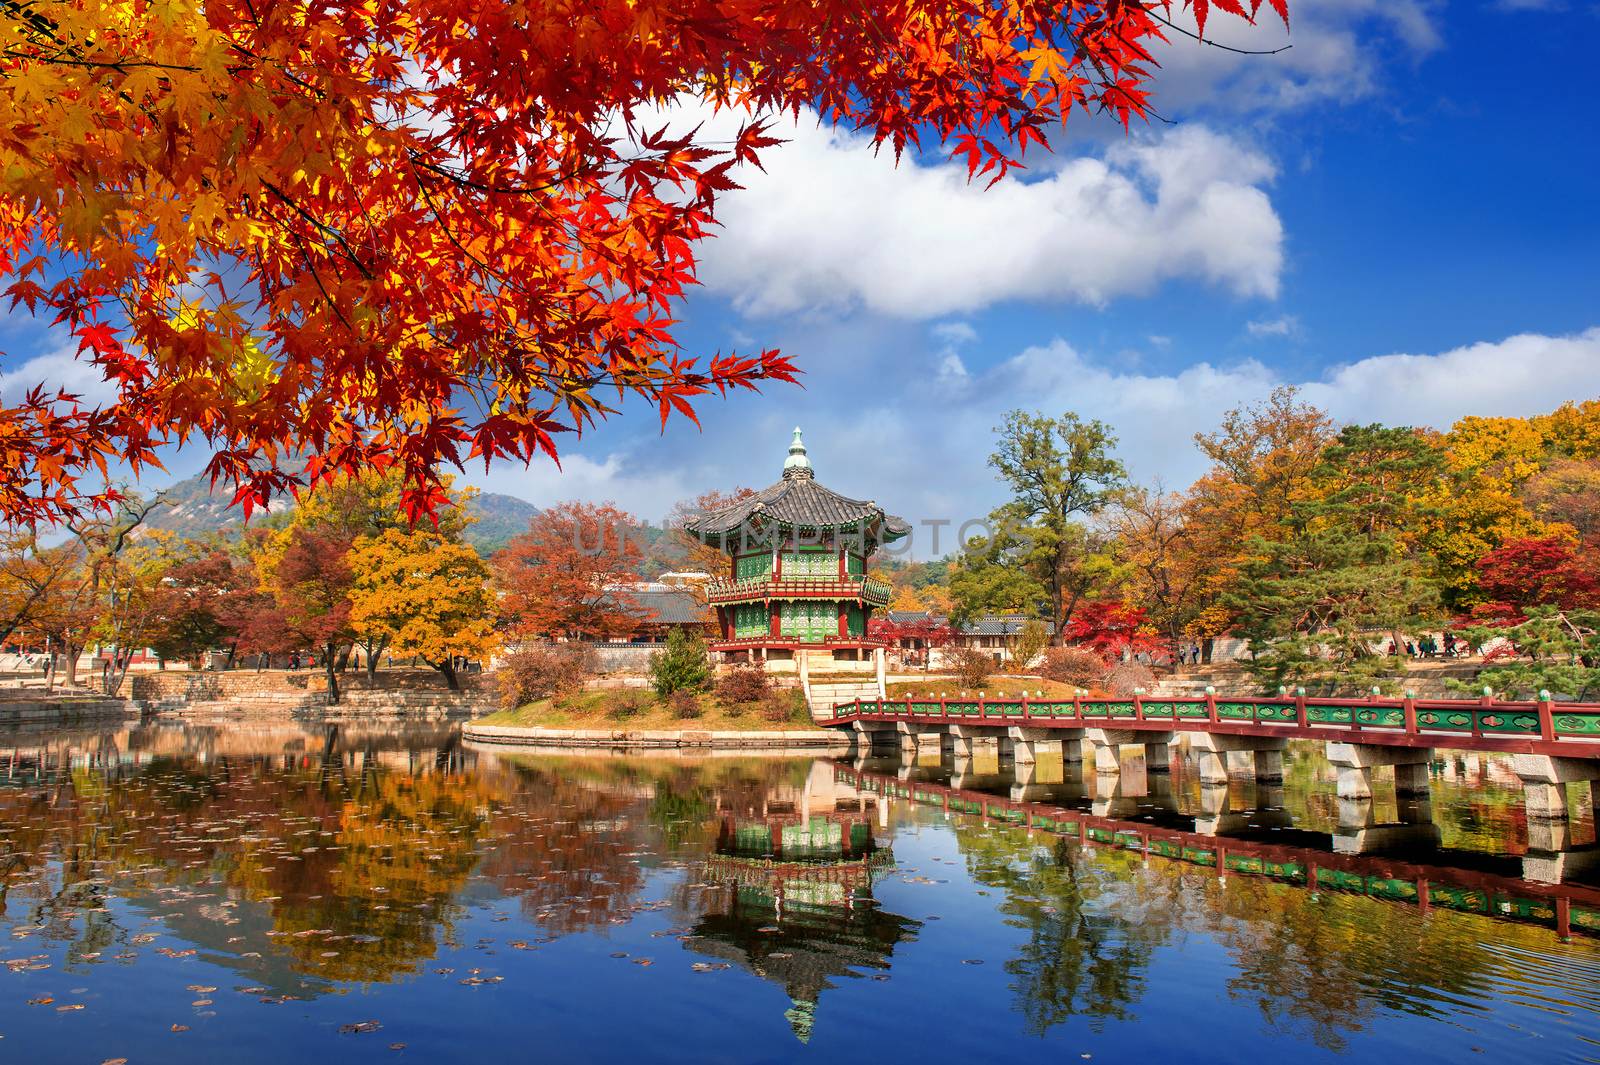 Gyeongbokgung Palace in autumn,South Korea. by gutarphotoghaphy